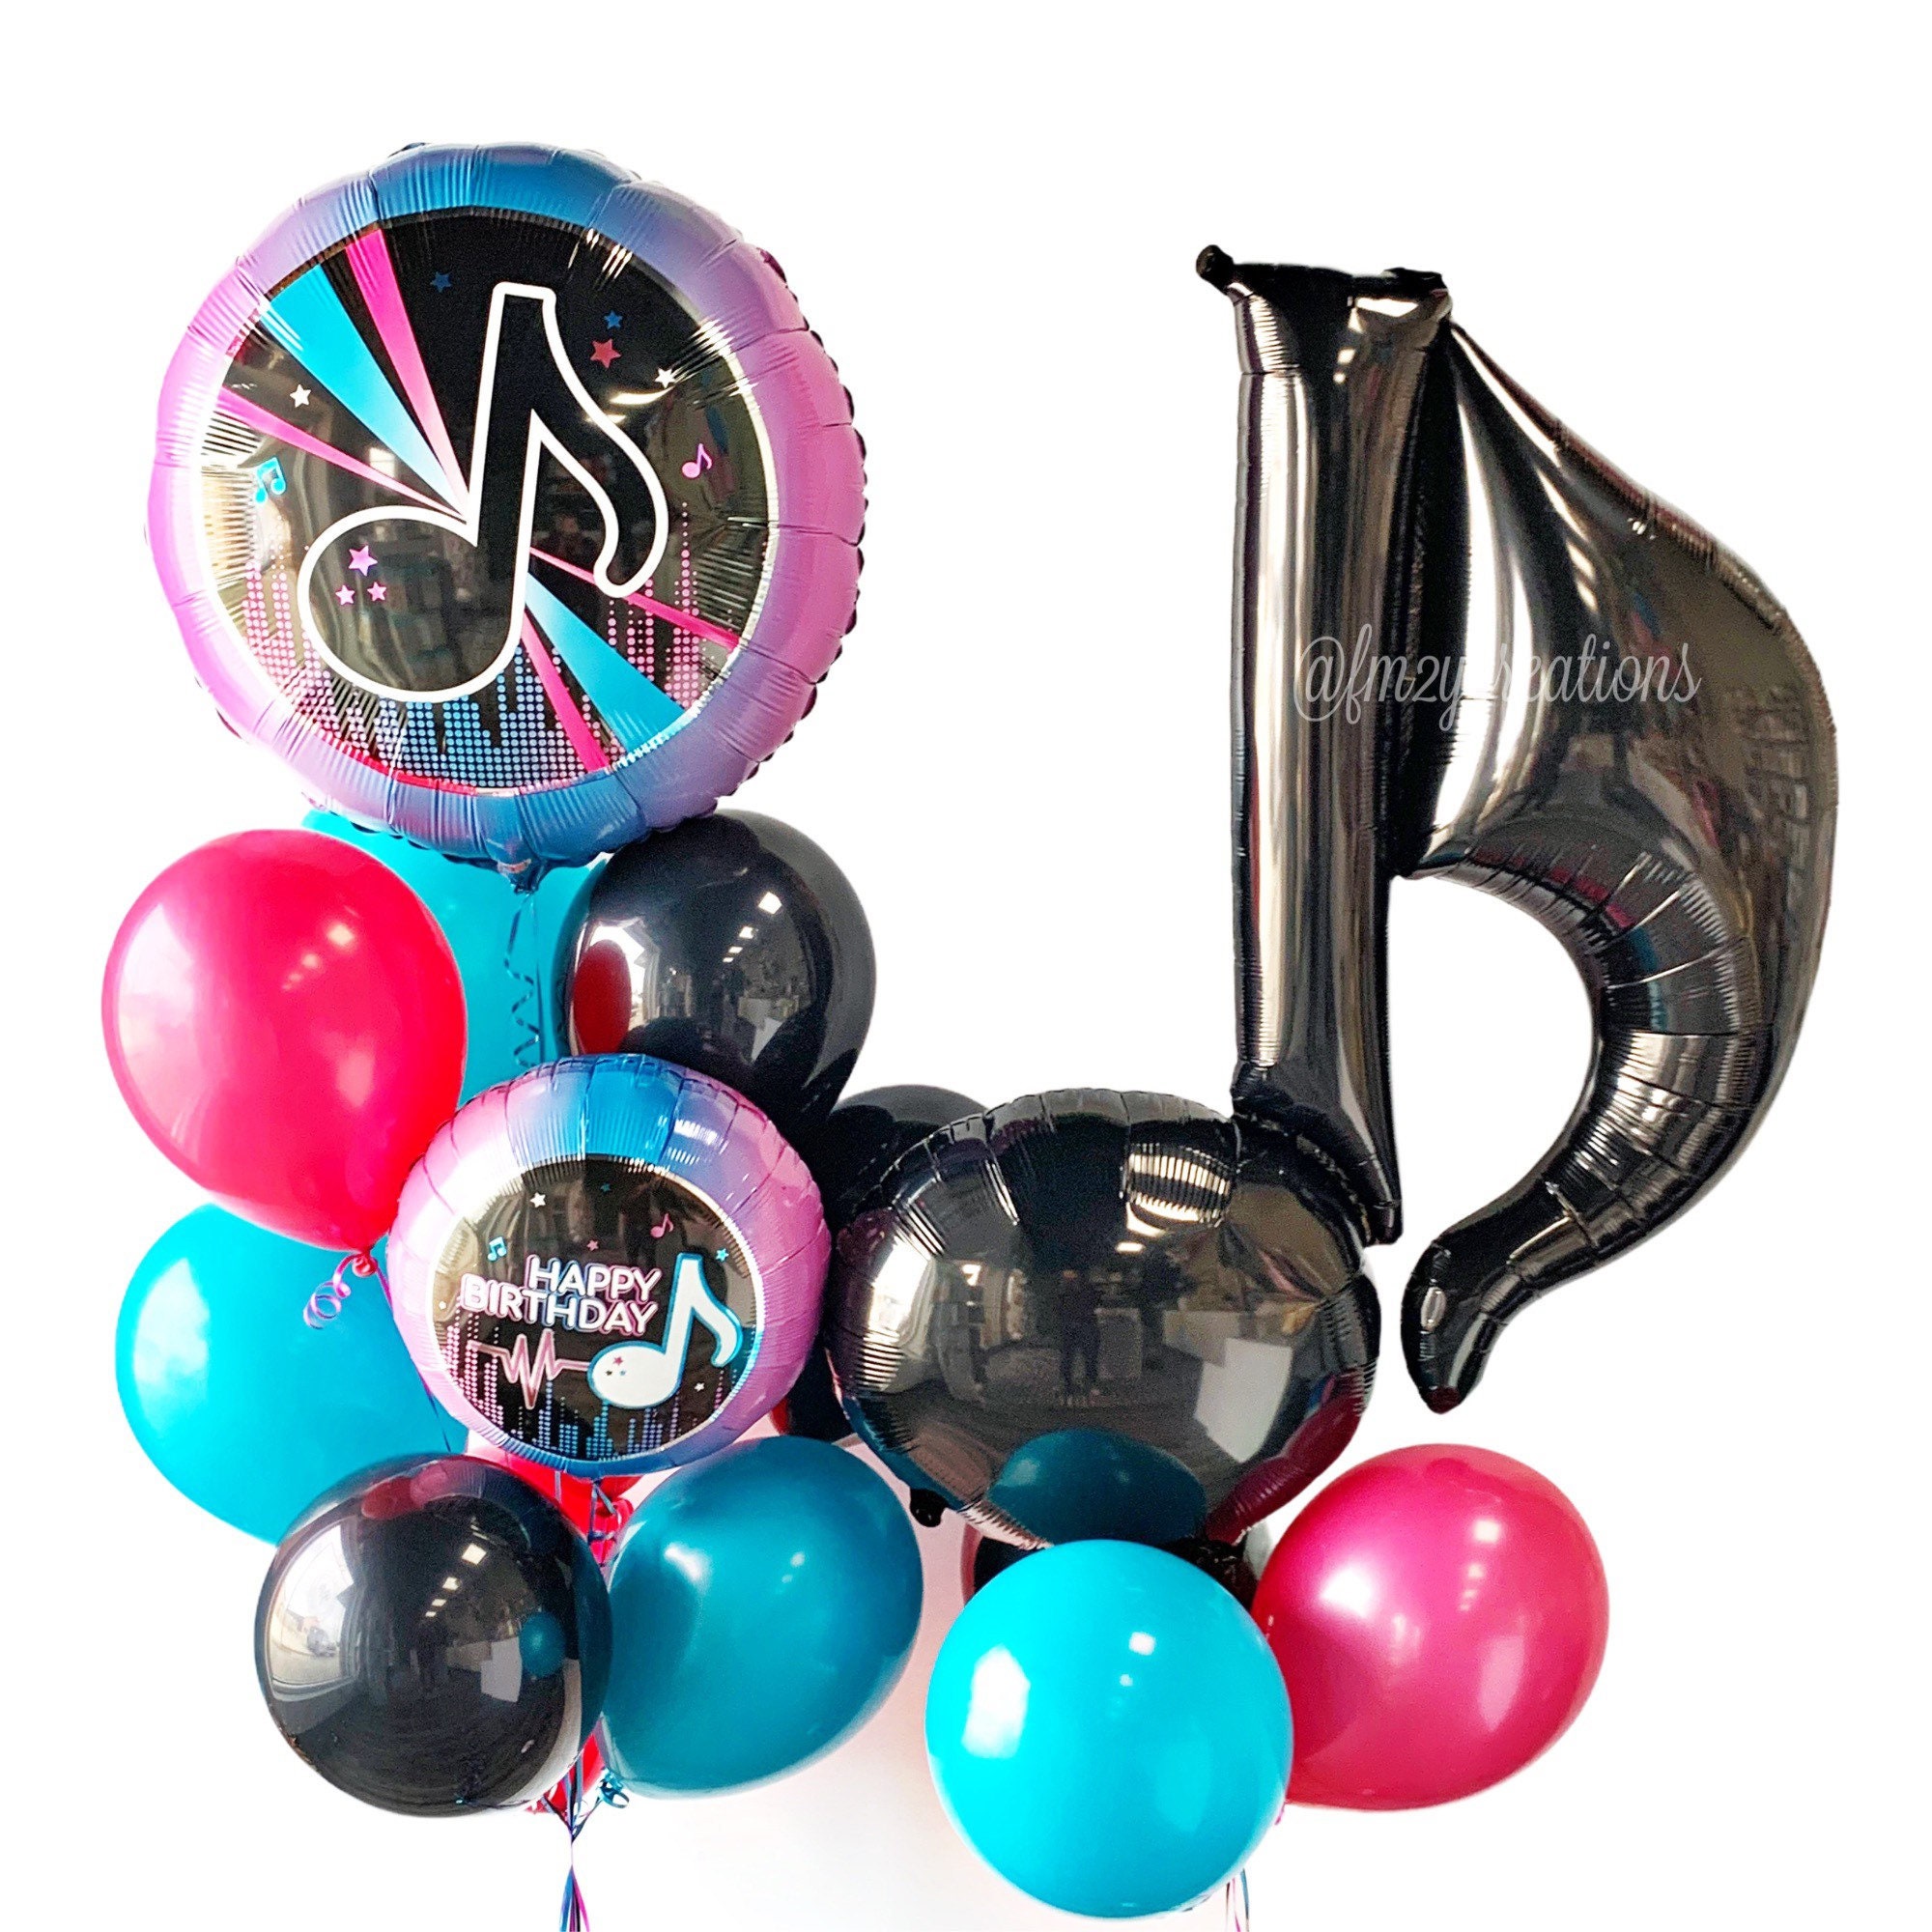 Wack-A Balloon!! #thebaileyboyz #wackaballoon #diffy #tiktokshop #tikt, wack a balloon